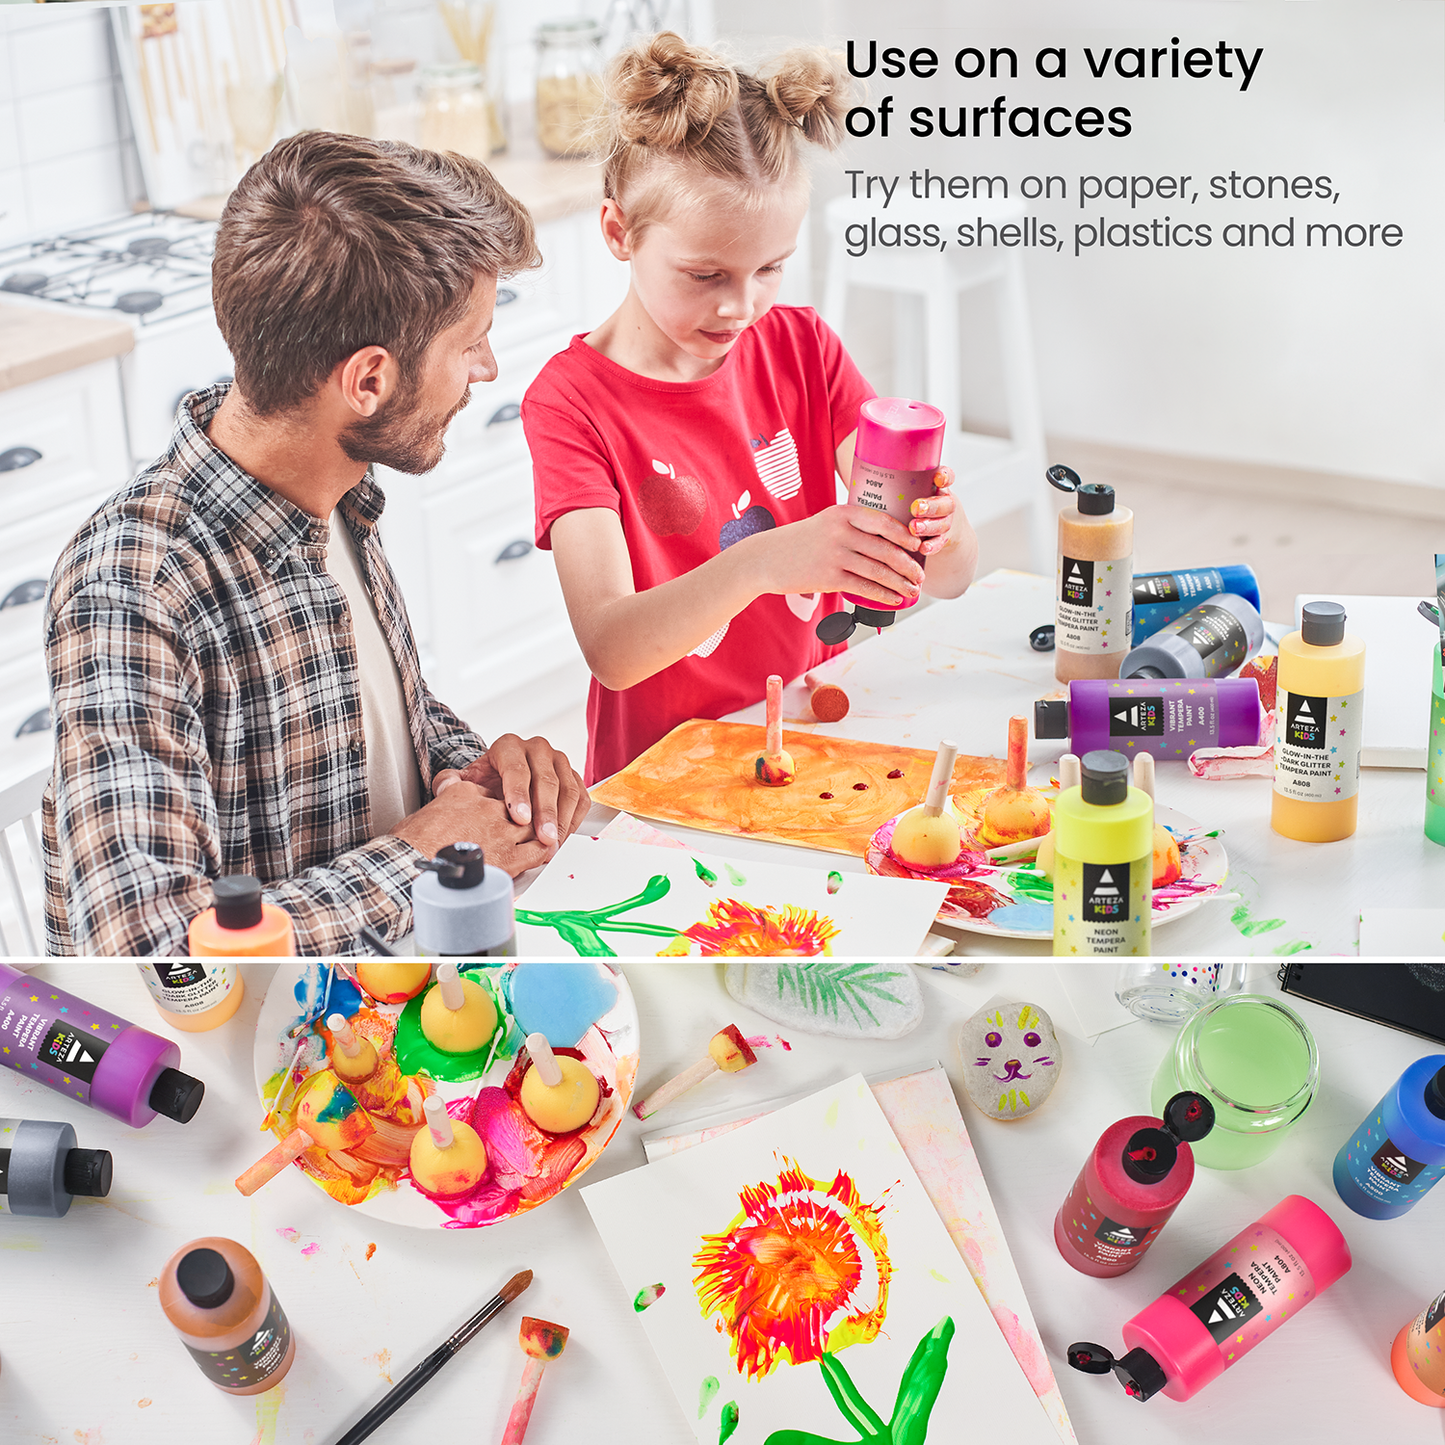 Kids Premium Tempera Paint, Assorted Colors, 400ml Bottles- Set of 16